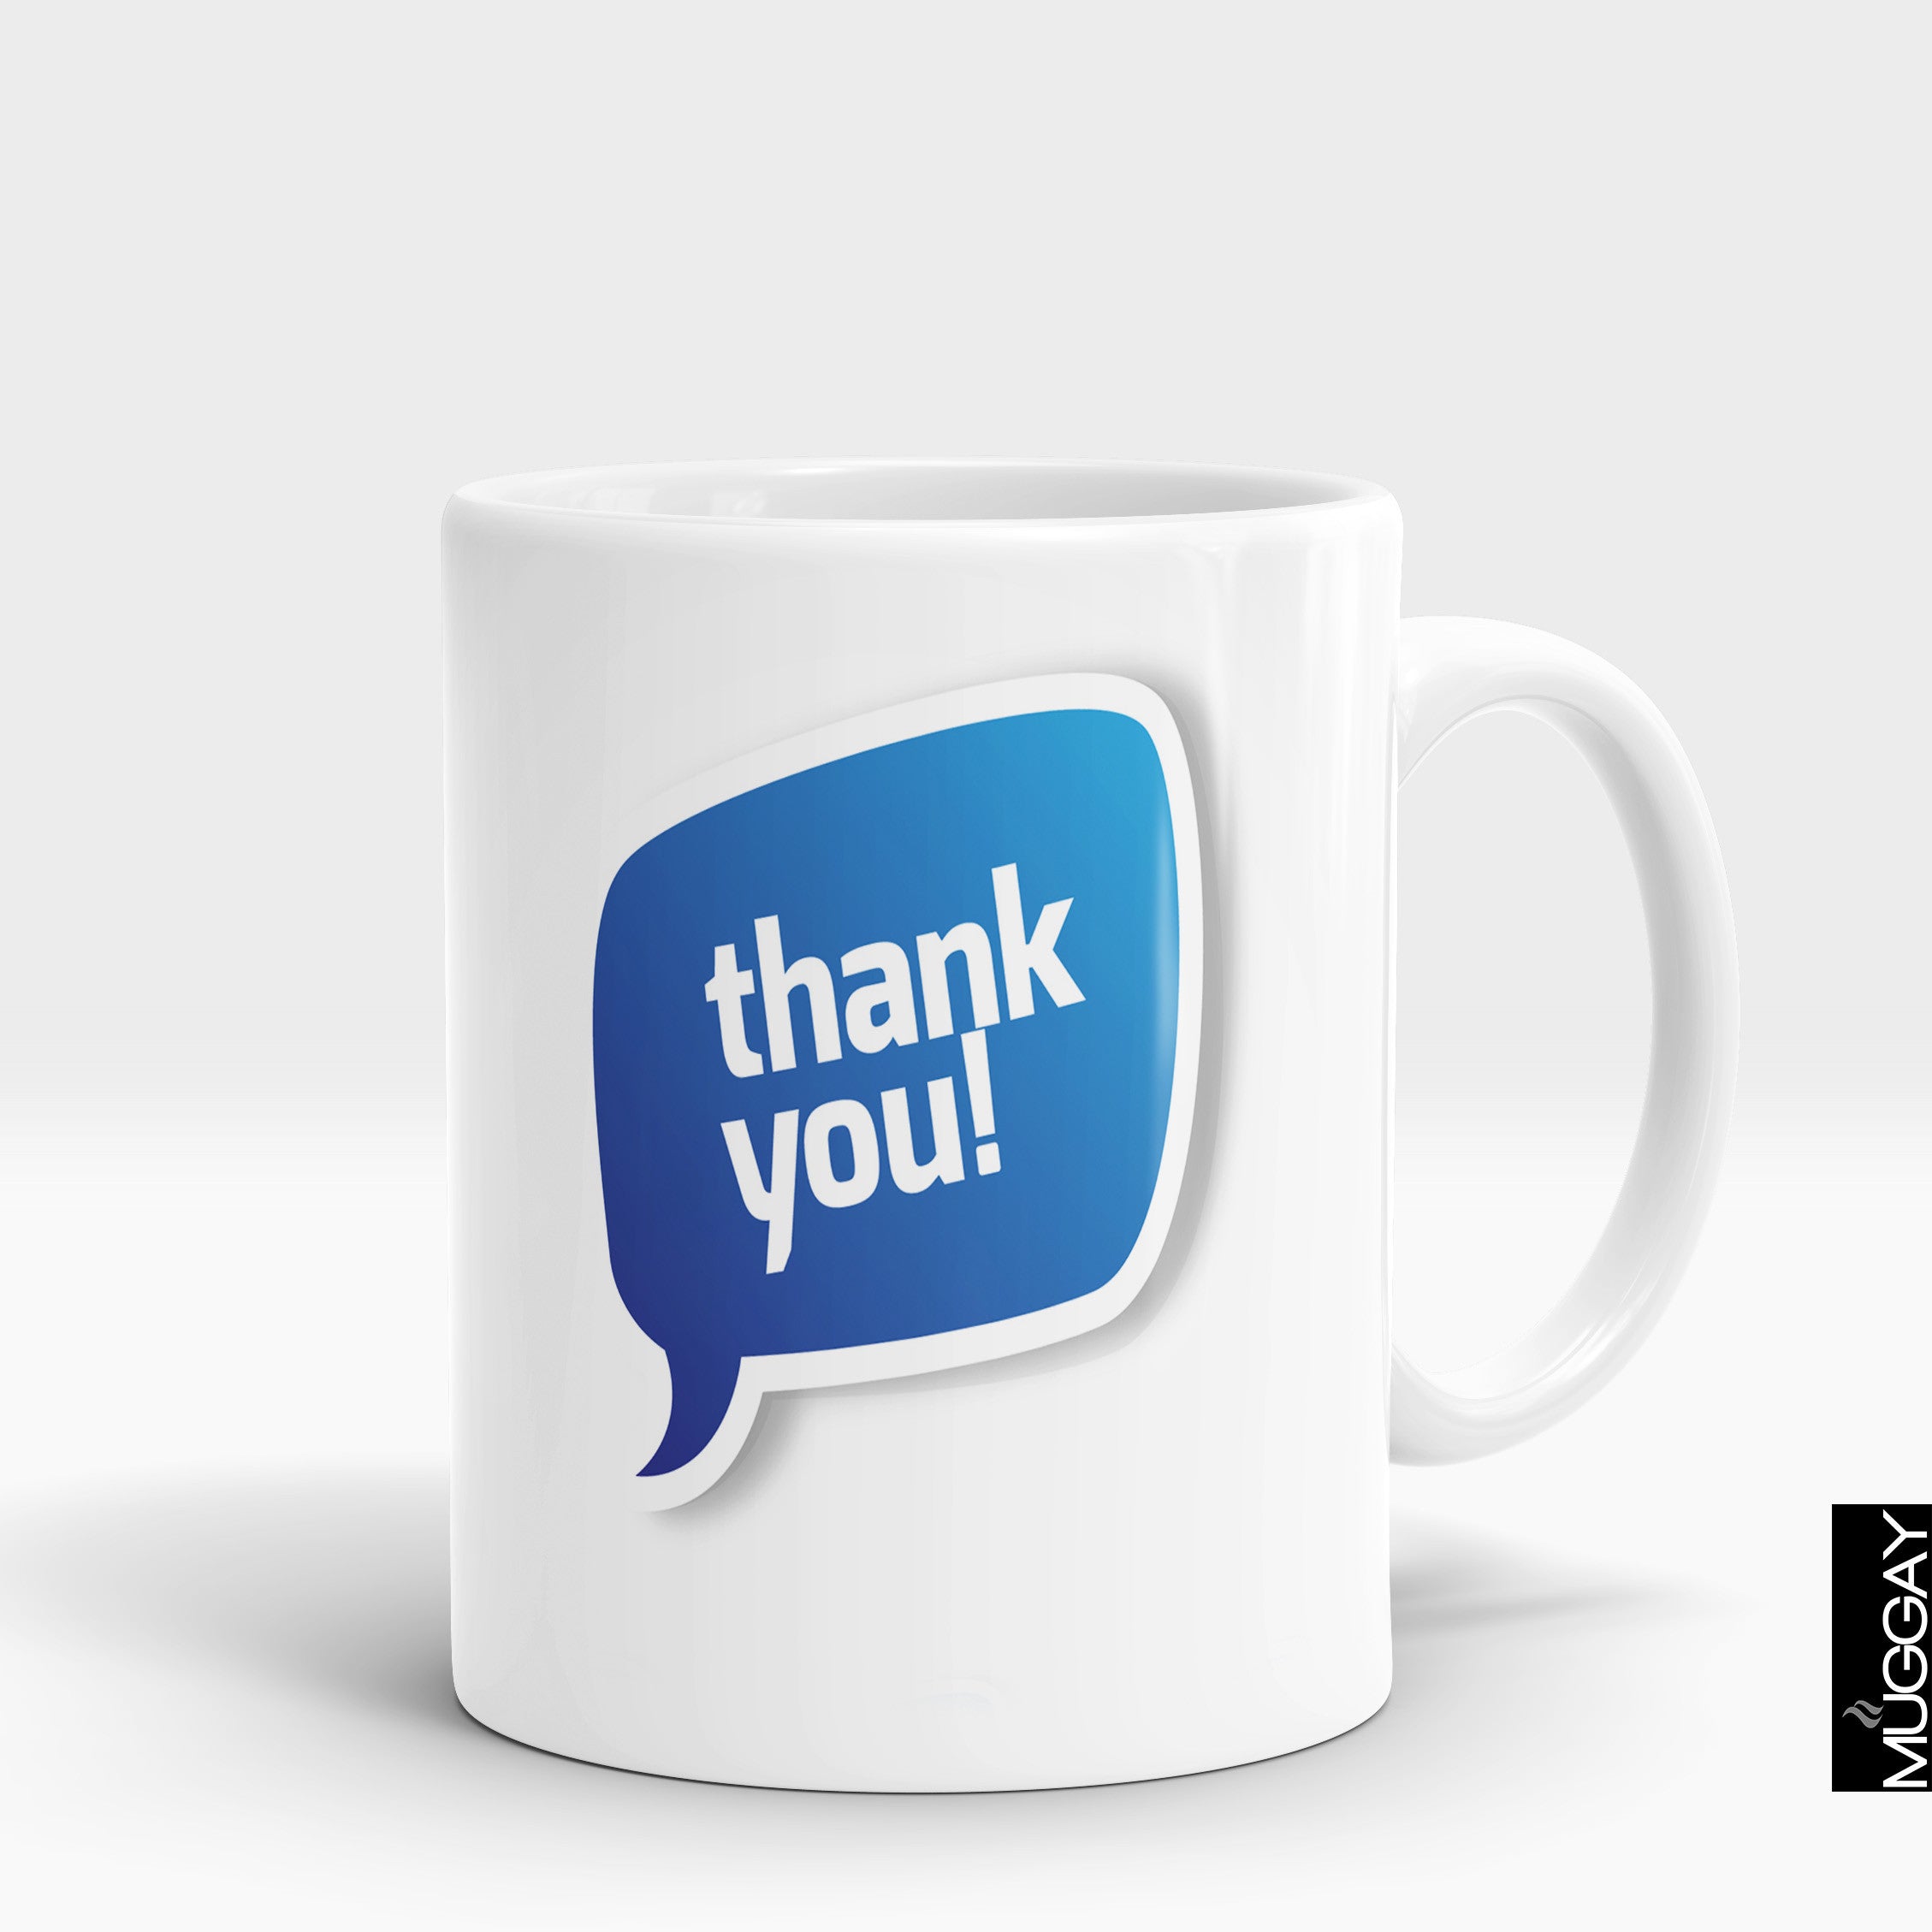 Thankyou mugs3